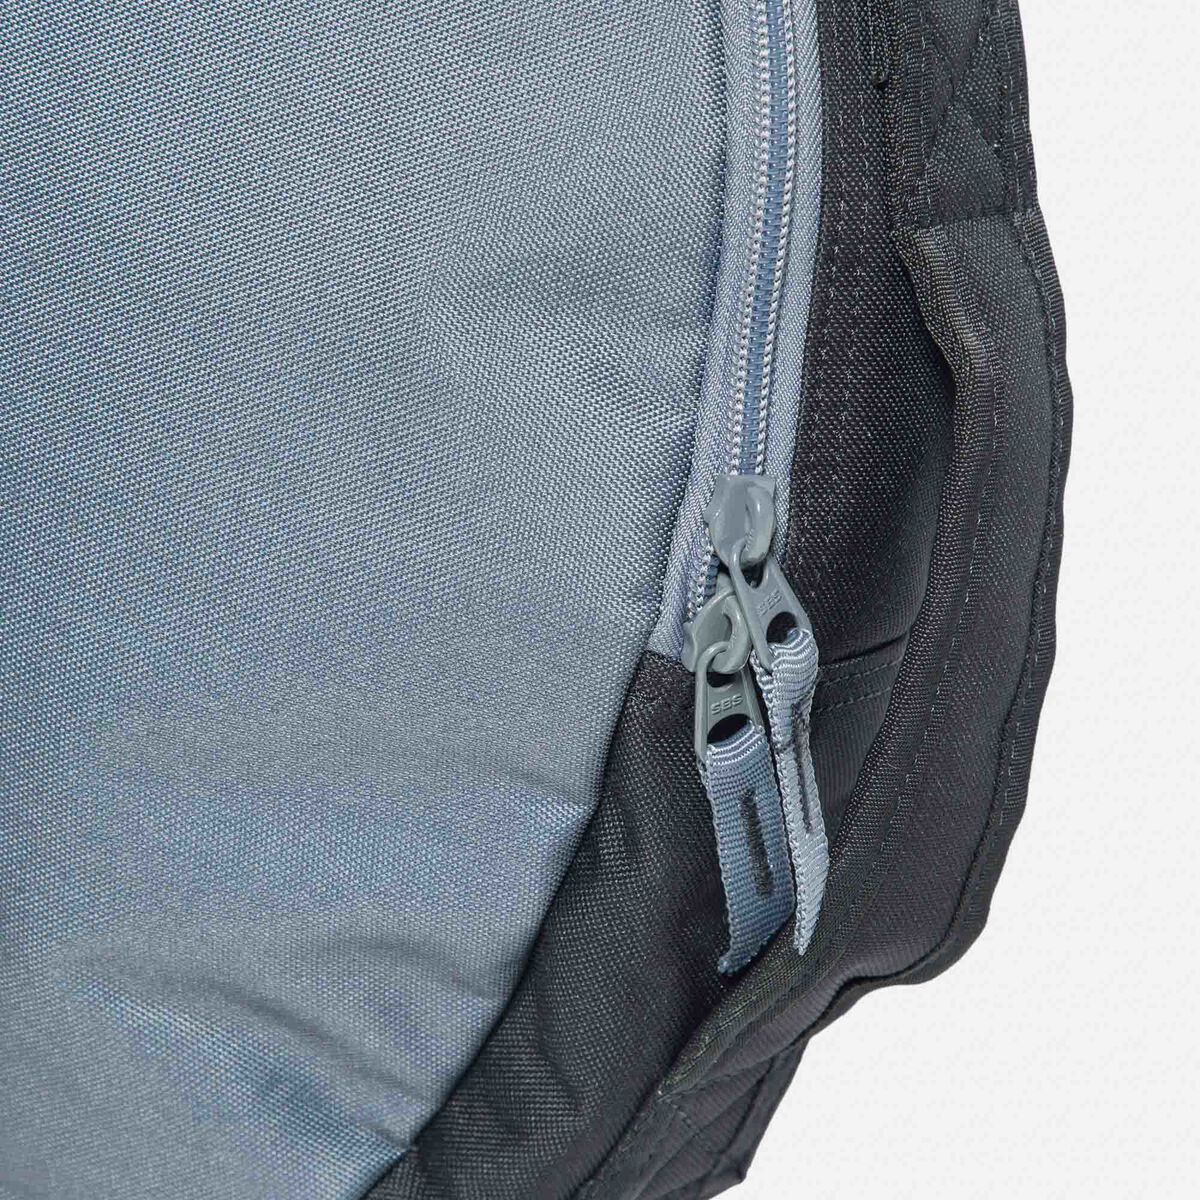 Rossignol Unisex Tactic Snowboard & Gear Bag | Bags & Backpacks Unisex ...